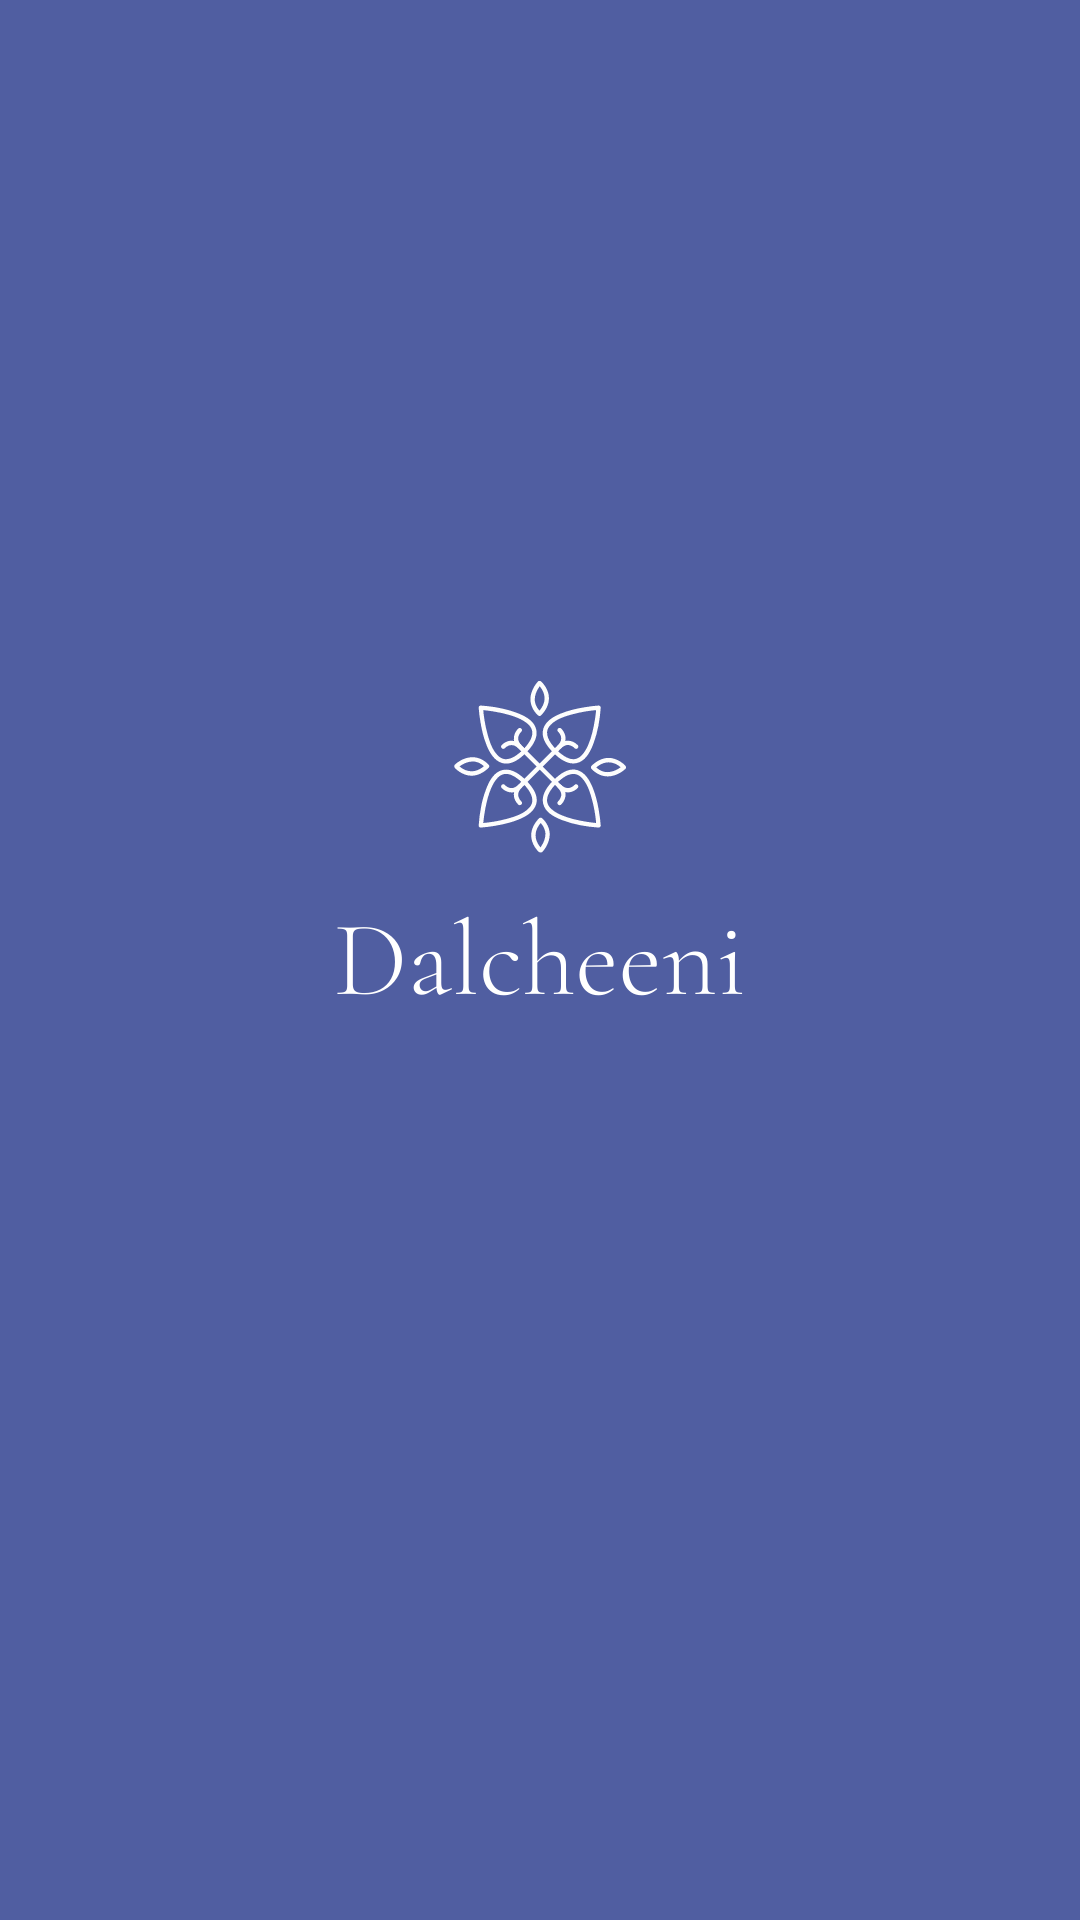 Dalcheeni